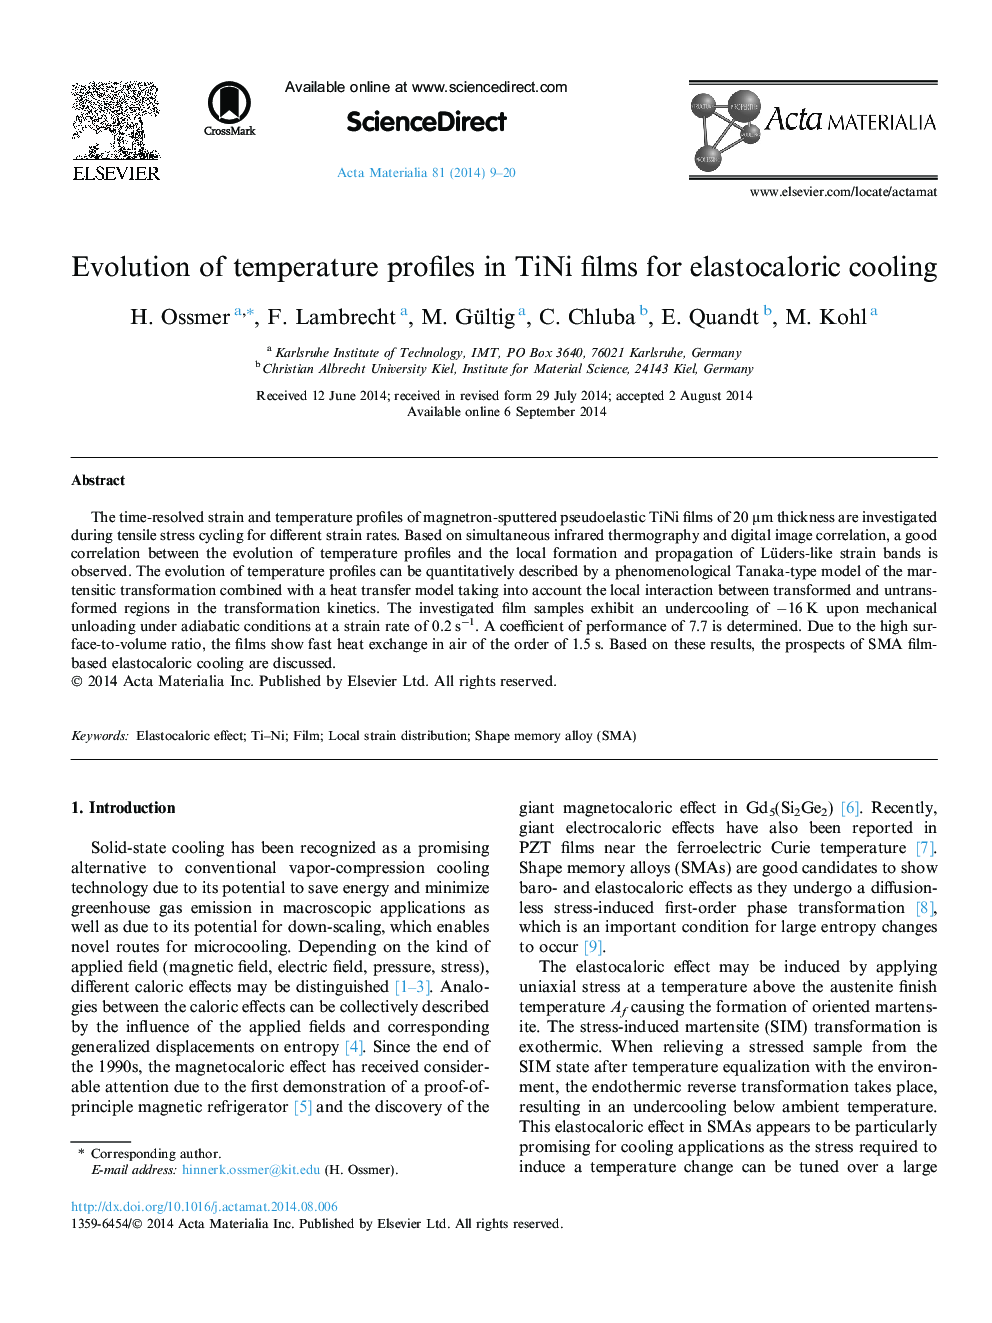 Evolution of temperature profiles in TiNi films for elastocaloric cooling